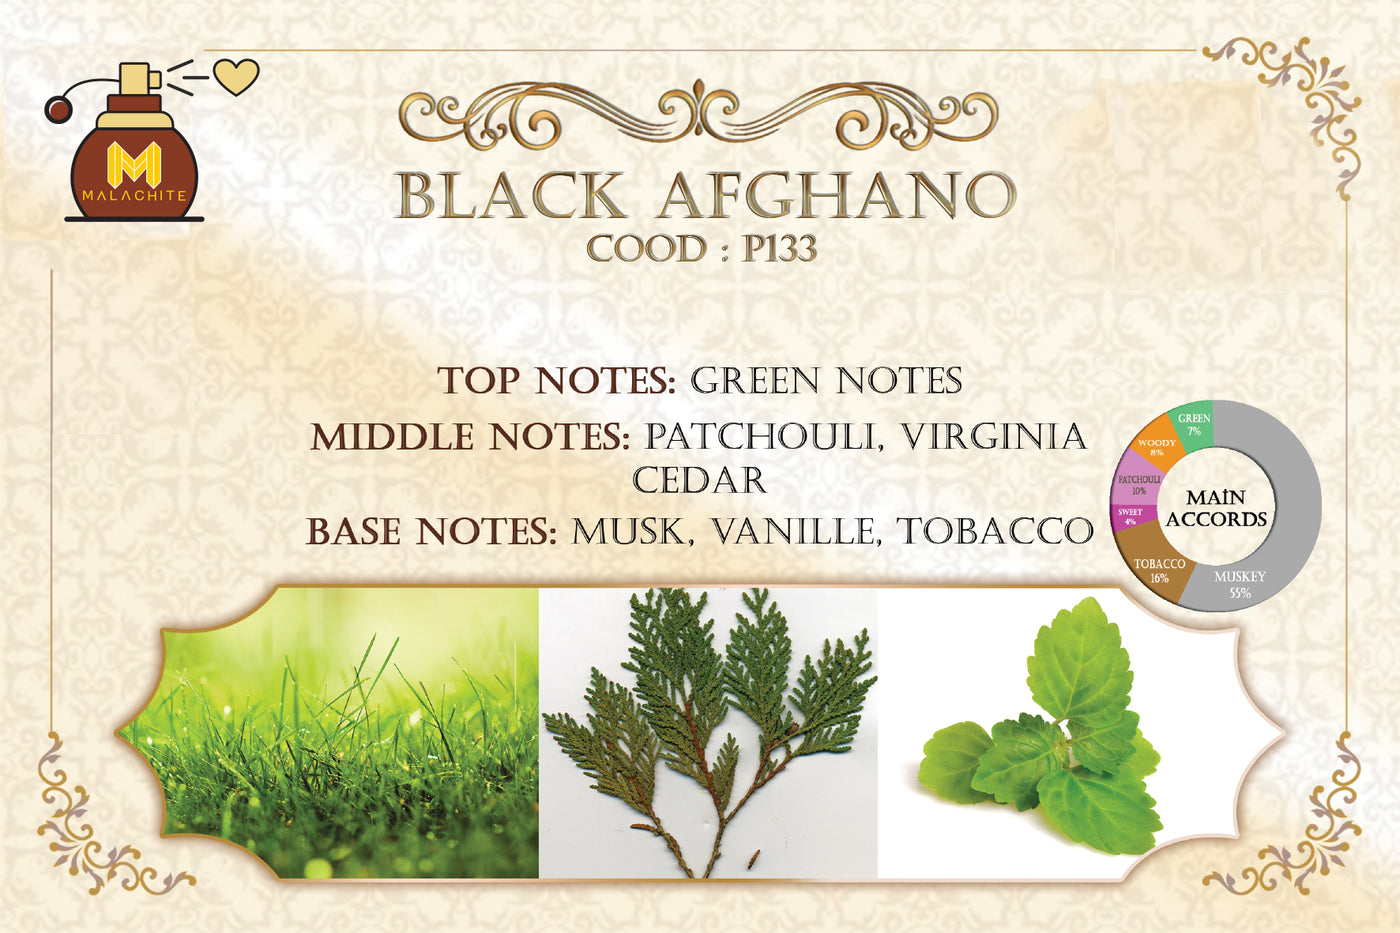 Aceites Black Afghano 12 ml